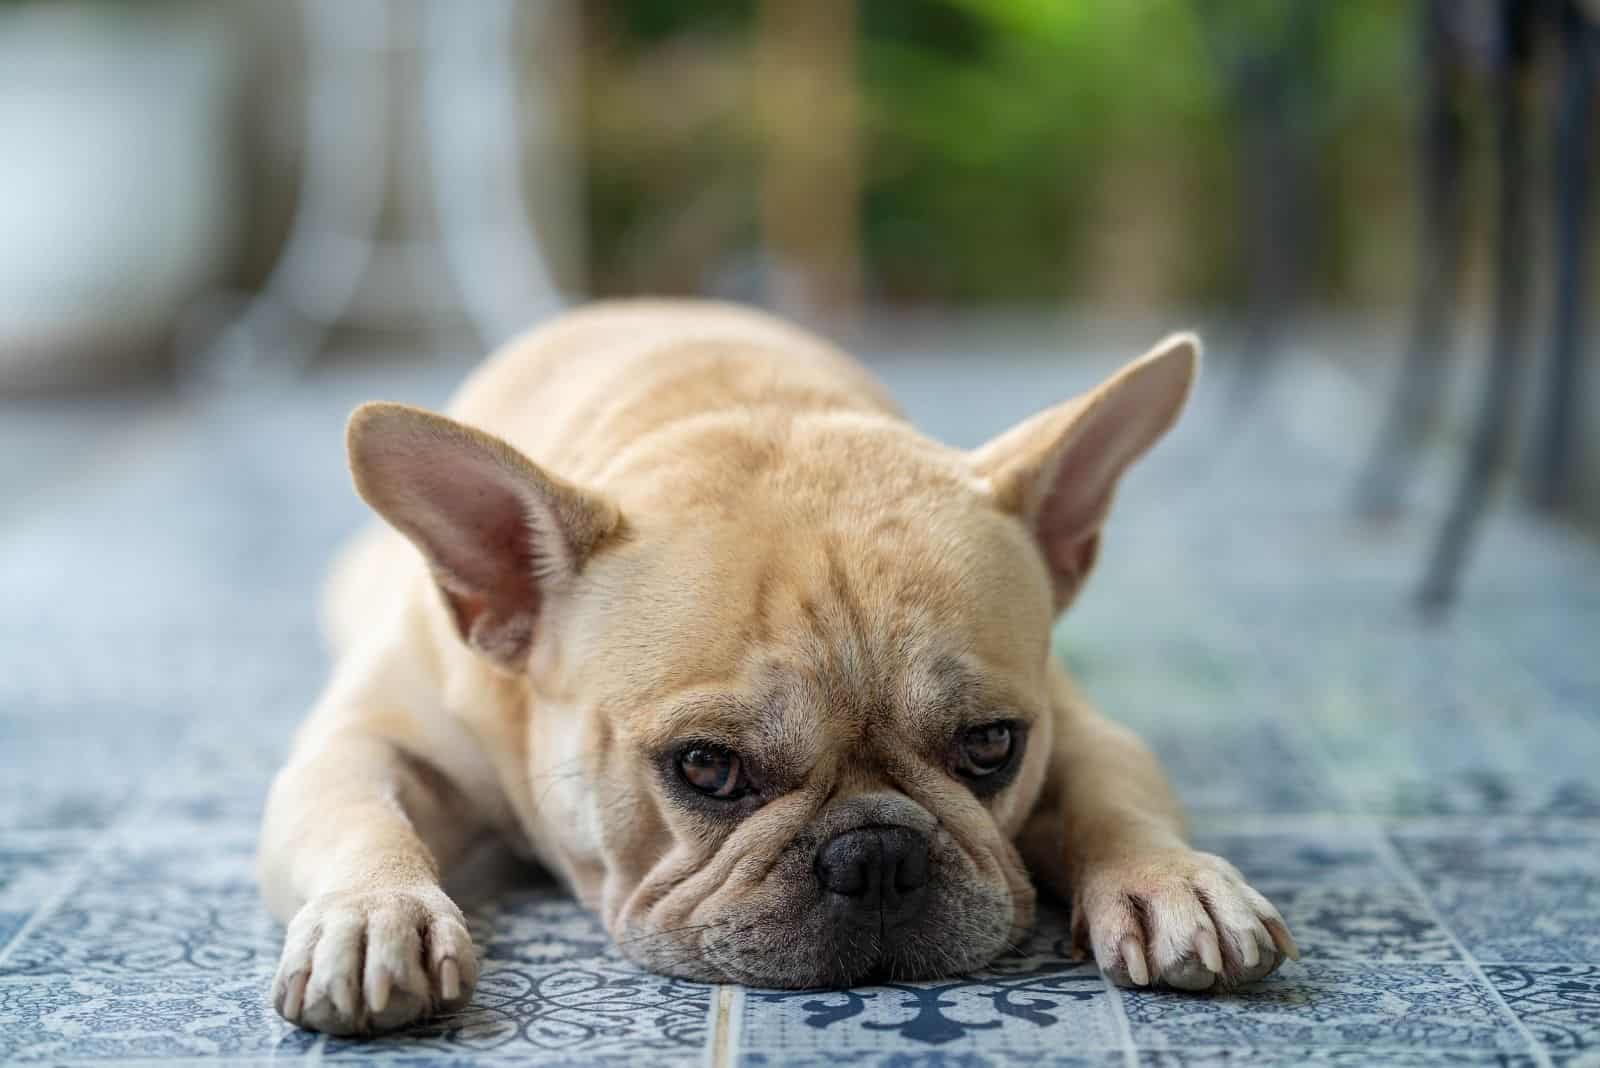 cute french bulldog lying down on the carpet